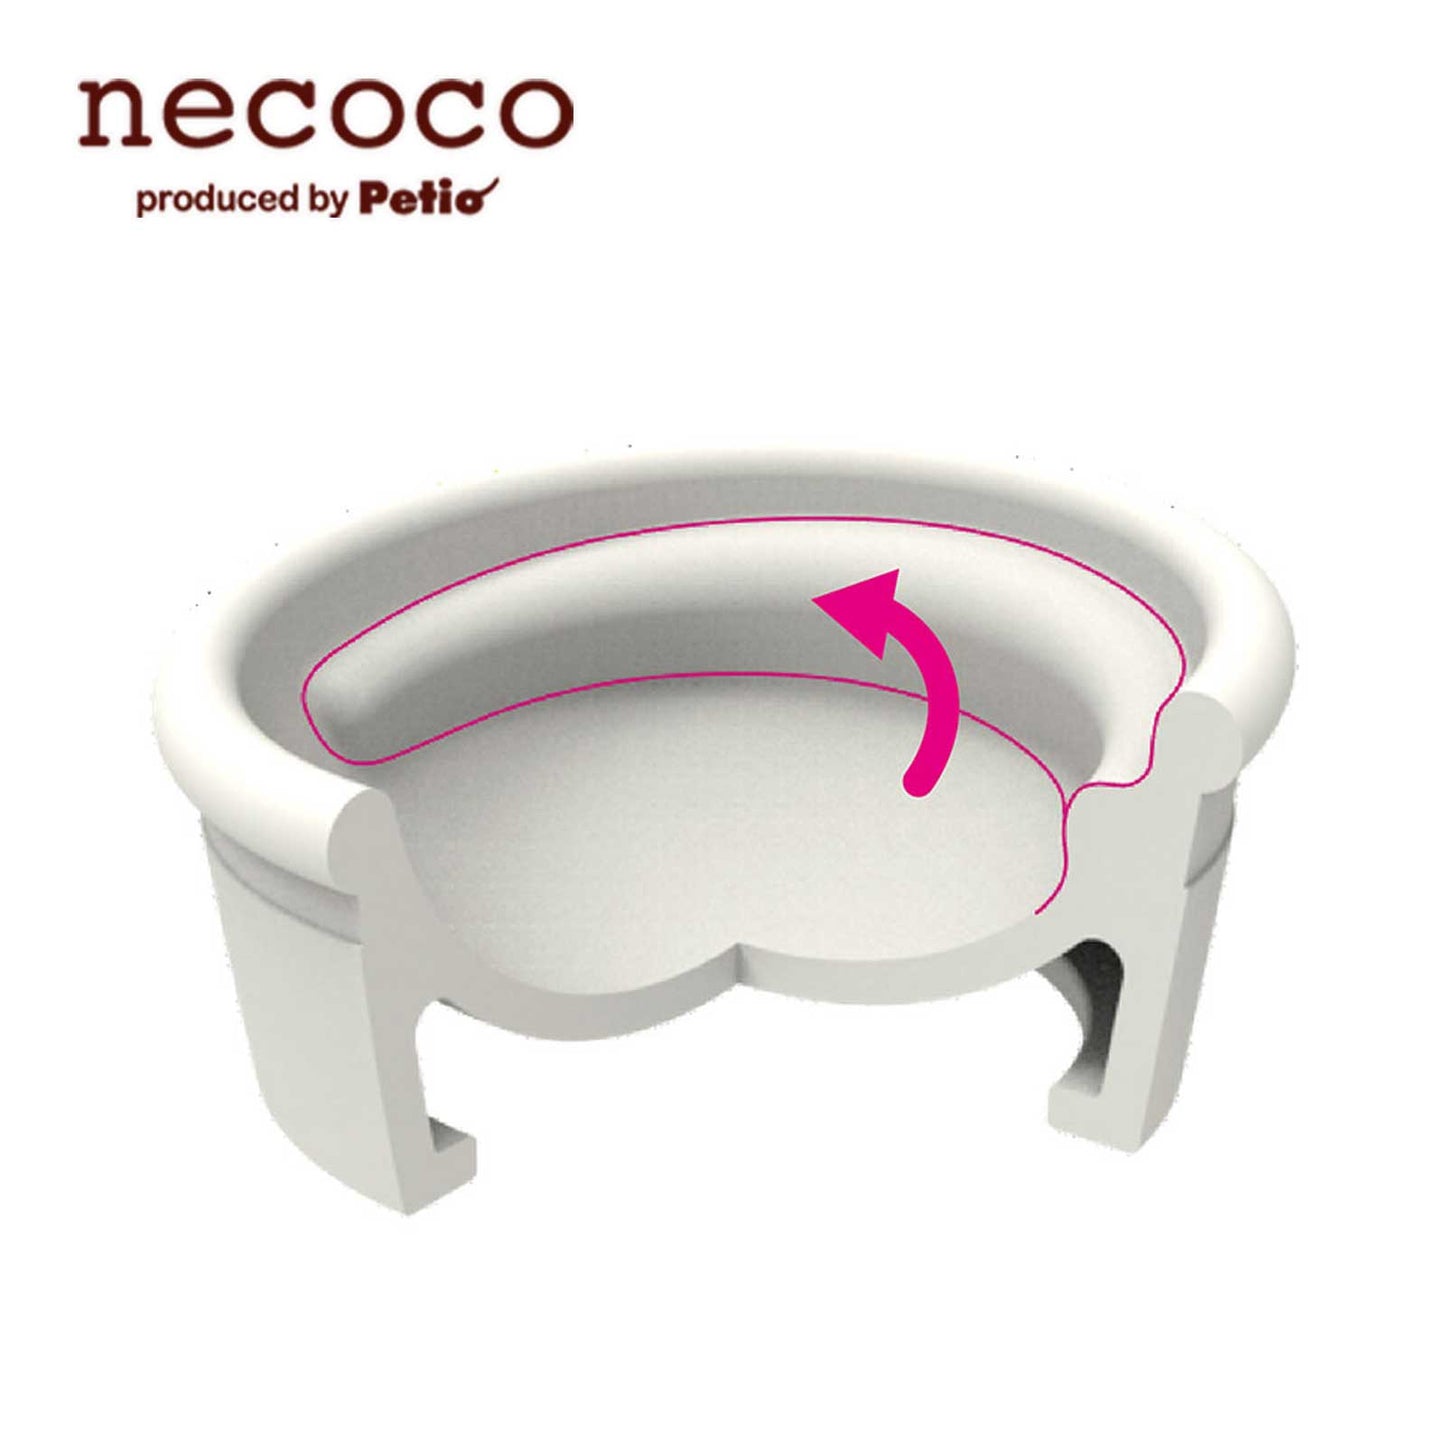 Petio Necoco Wood Grain Ceramic Cat Inclined Feeding Bowl - Dry Food